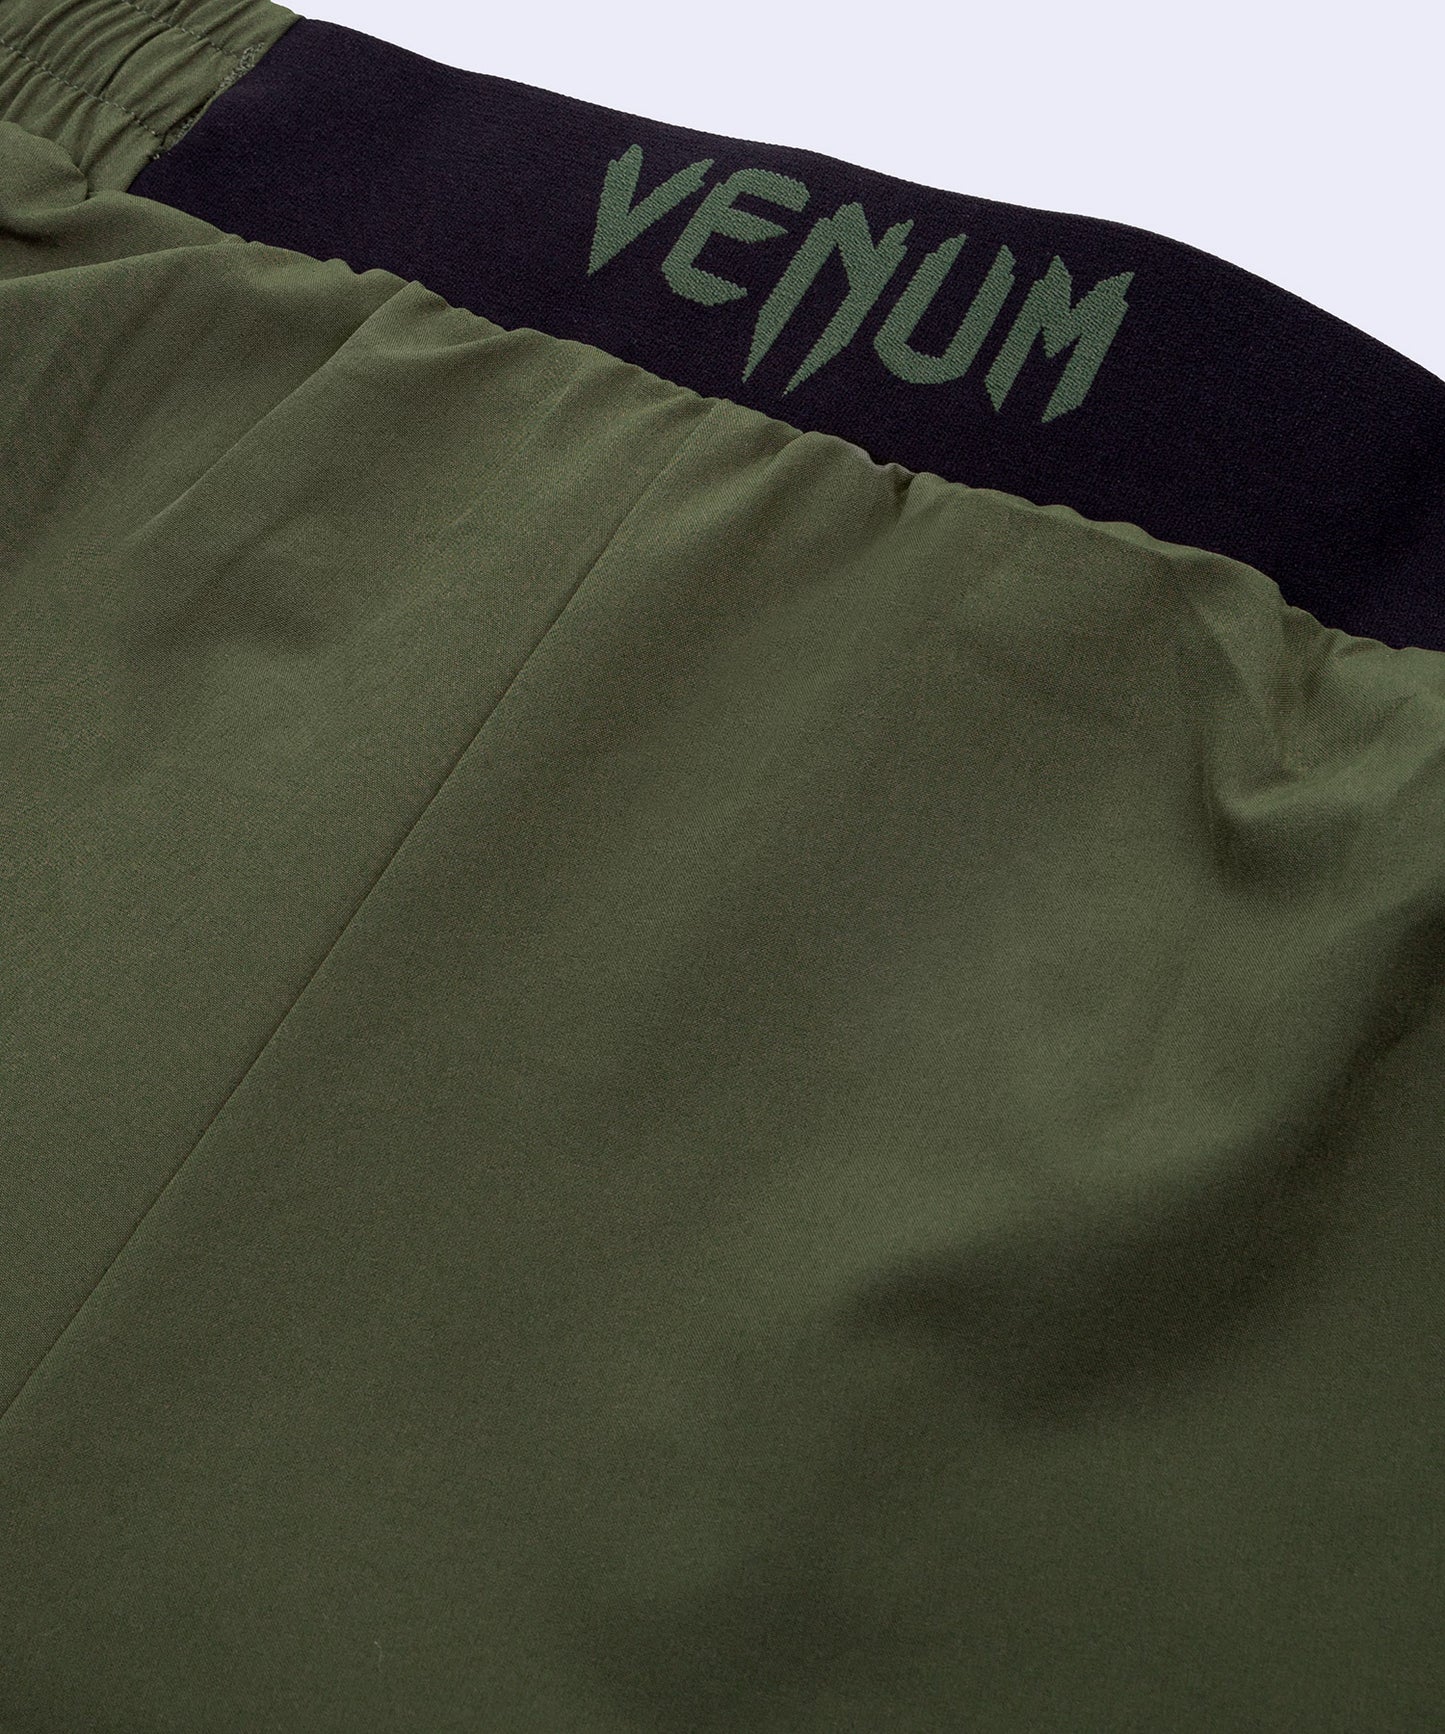 Venum Classic Training Shorts - Khaki